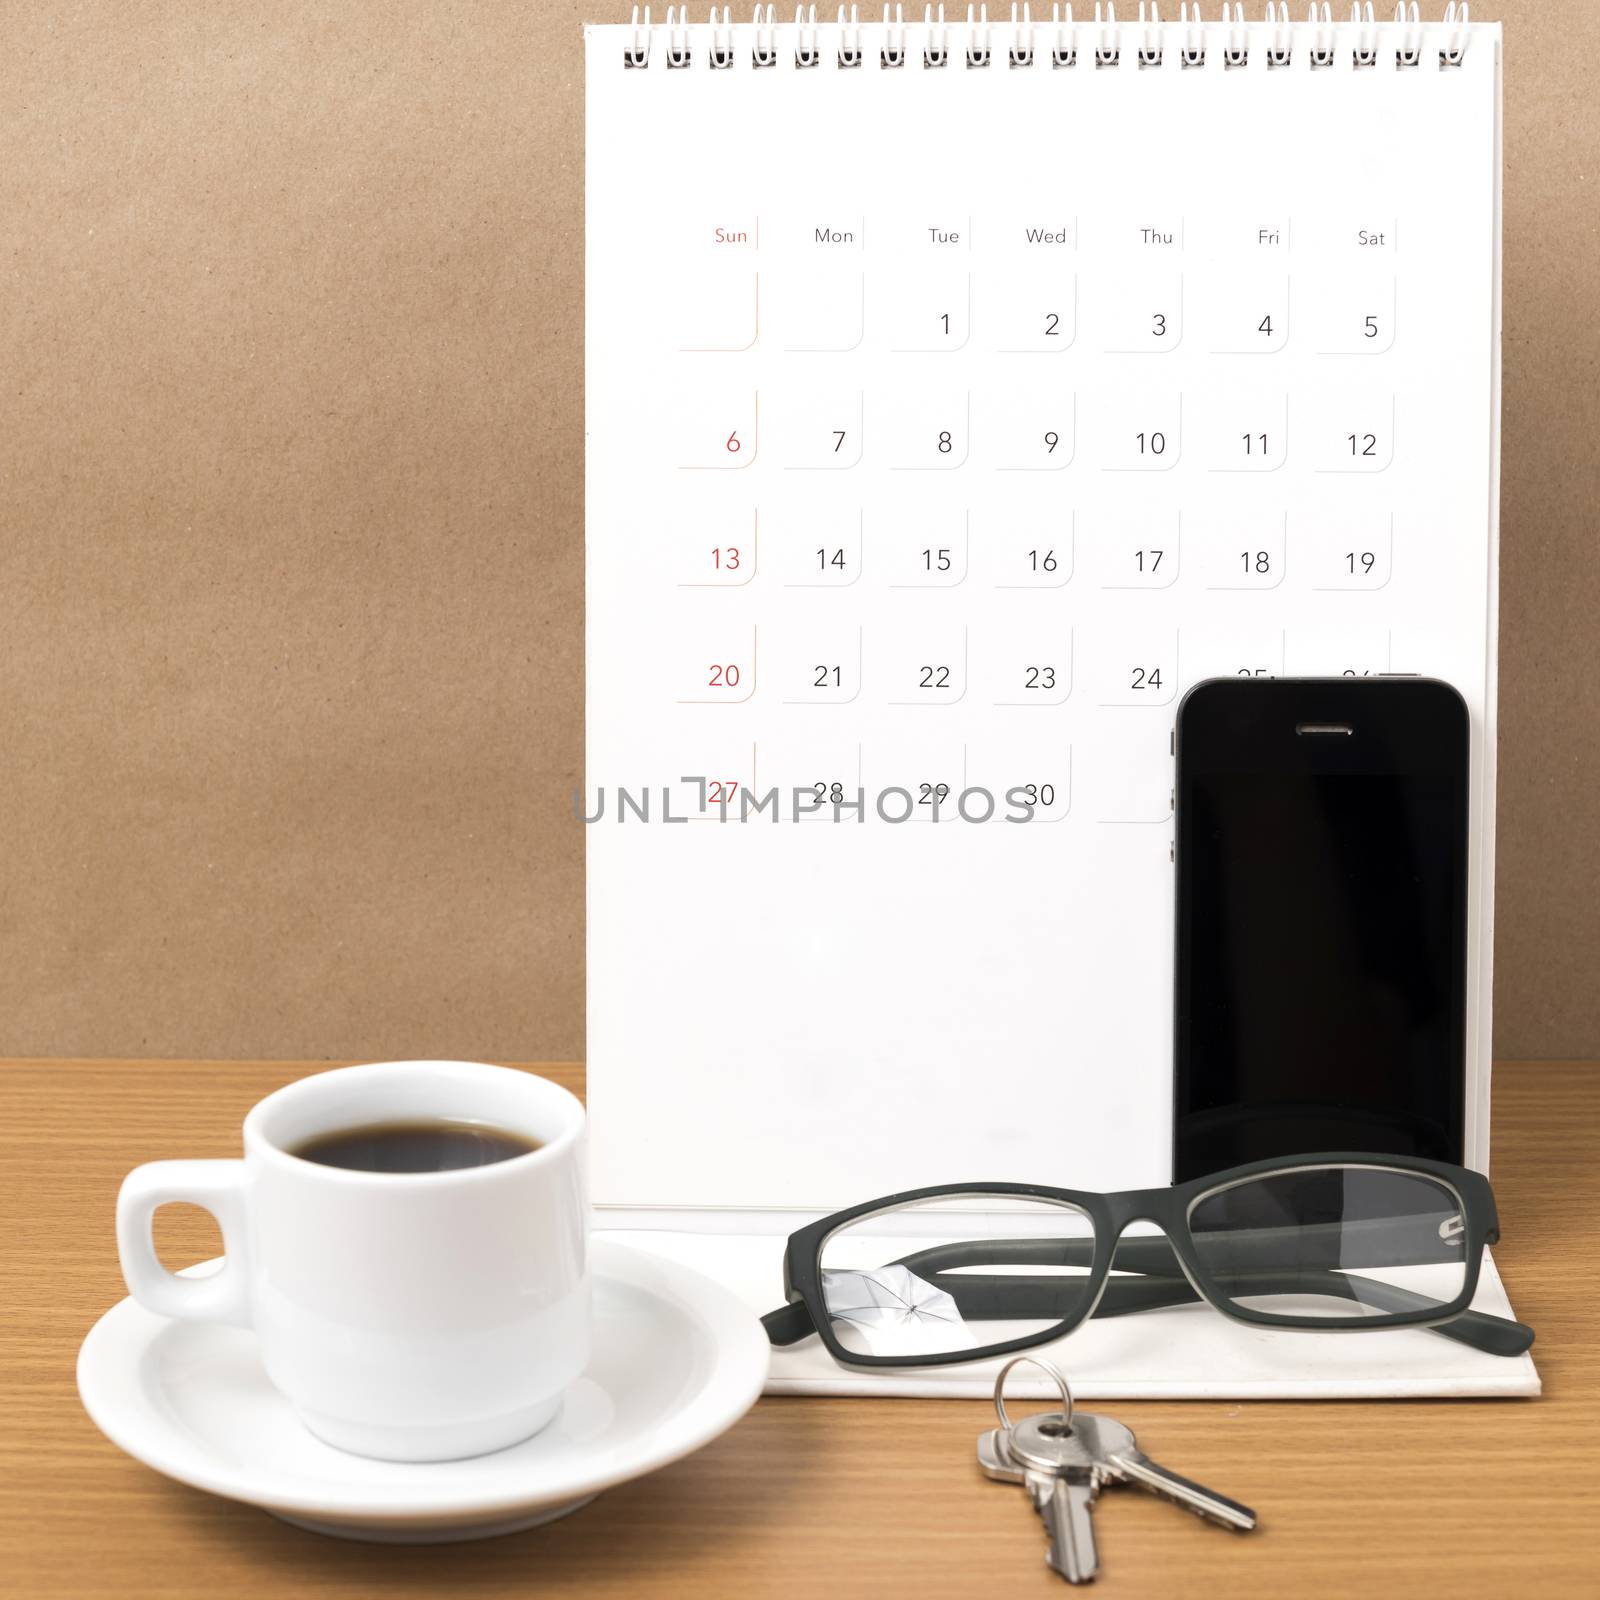 coffee,phone,eyeglasses,calendar and key on wood table background